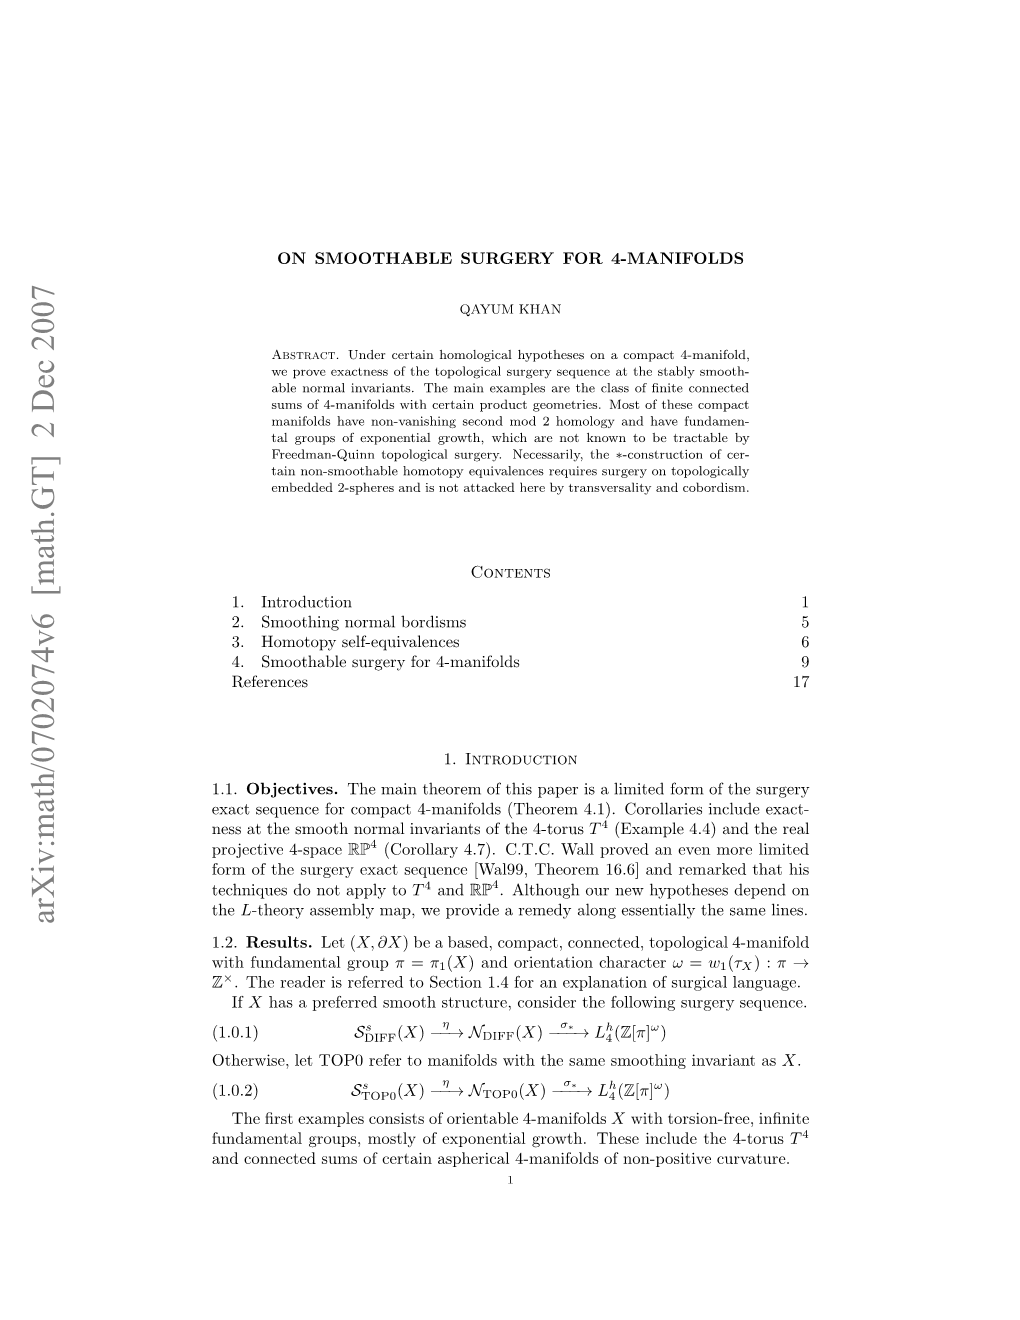 [Math.GT] 2 Dec 2007 Z Ihfnaetlgroup Fundamental with the 1.2